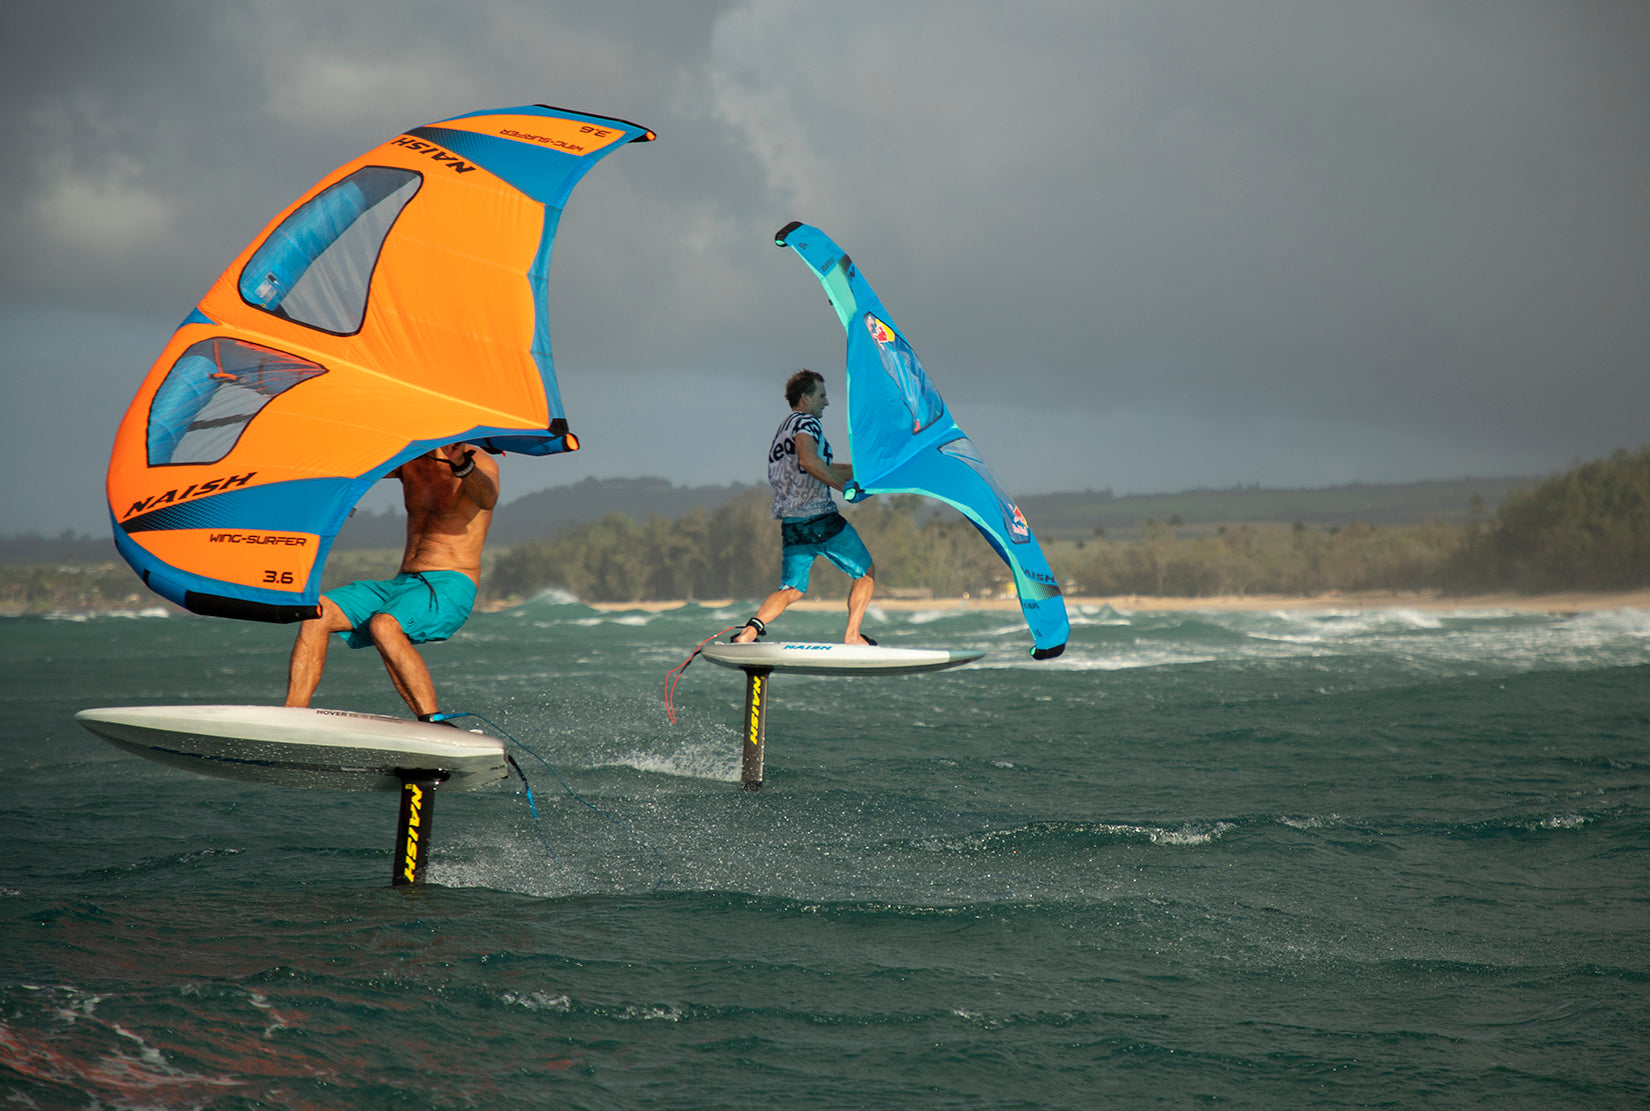 Naish S26 Wing Surfer 4.6 meter - DEEP DISCOUNTS! – Wind-NC